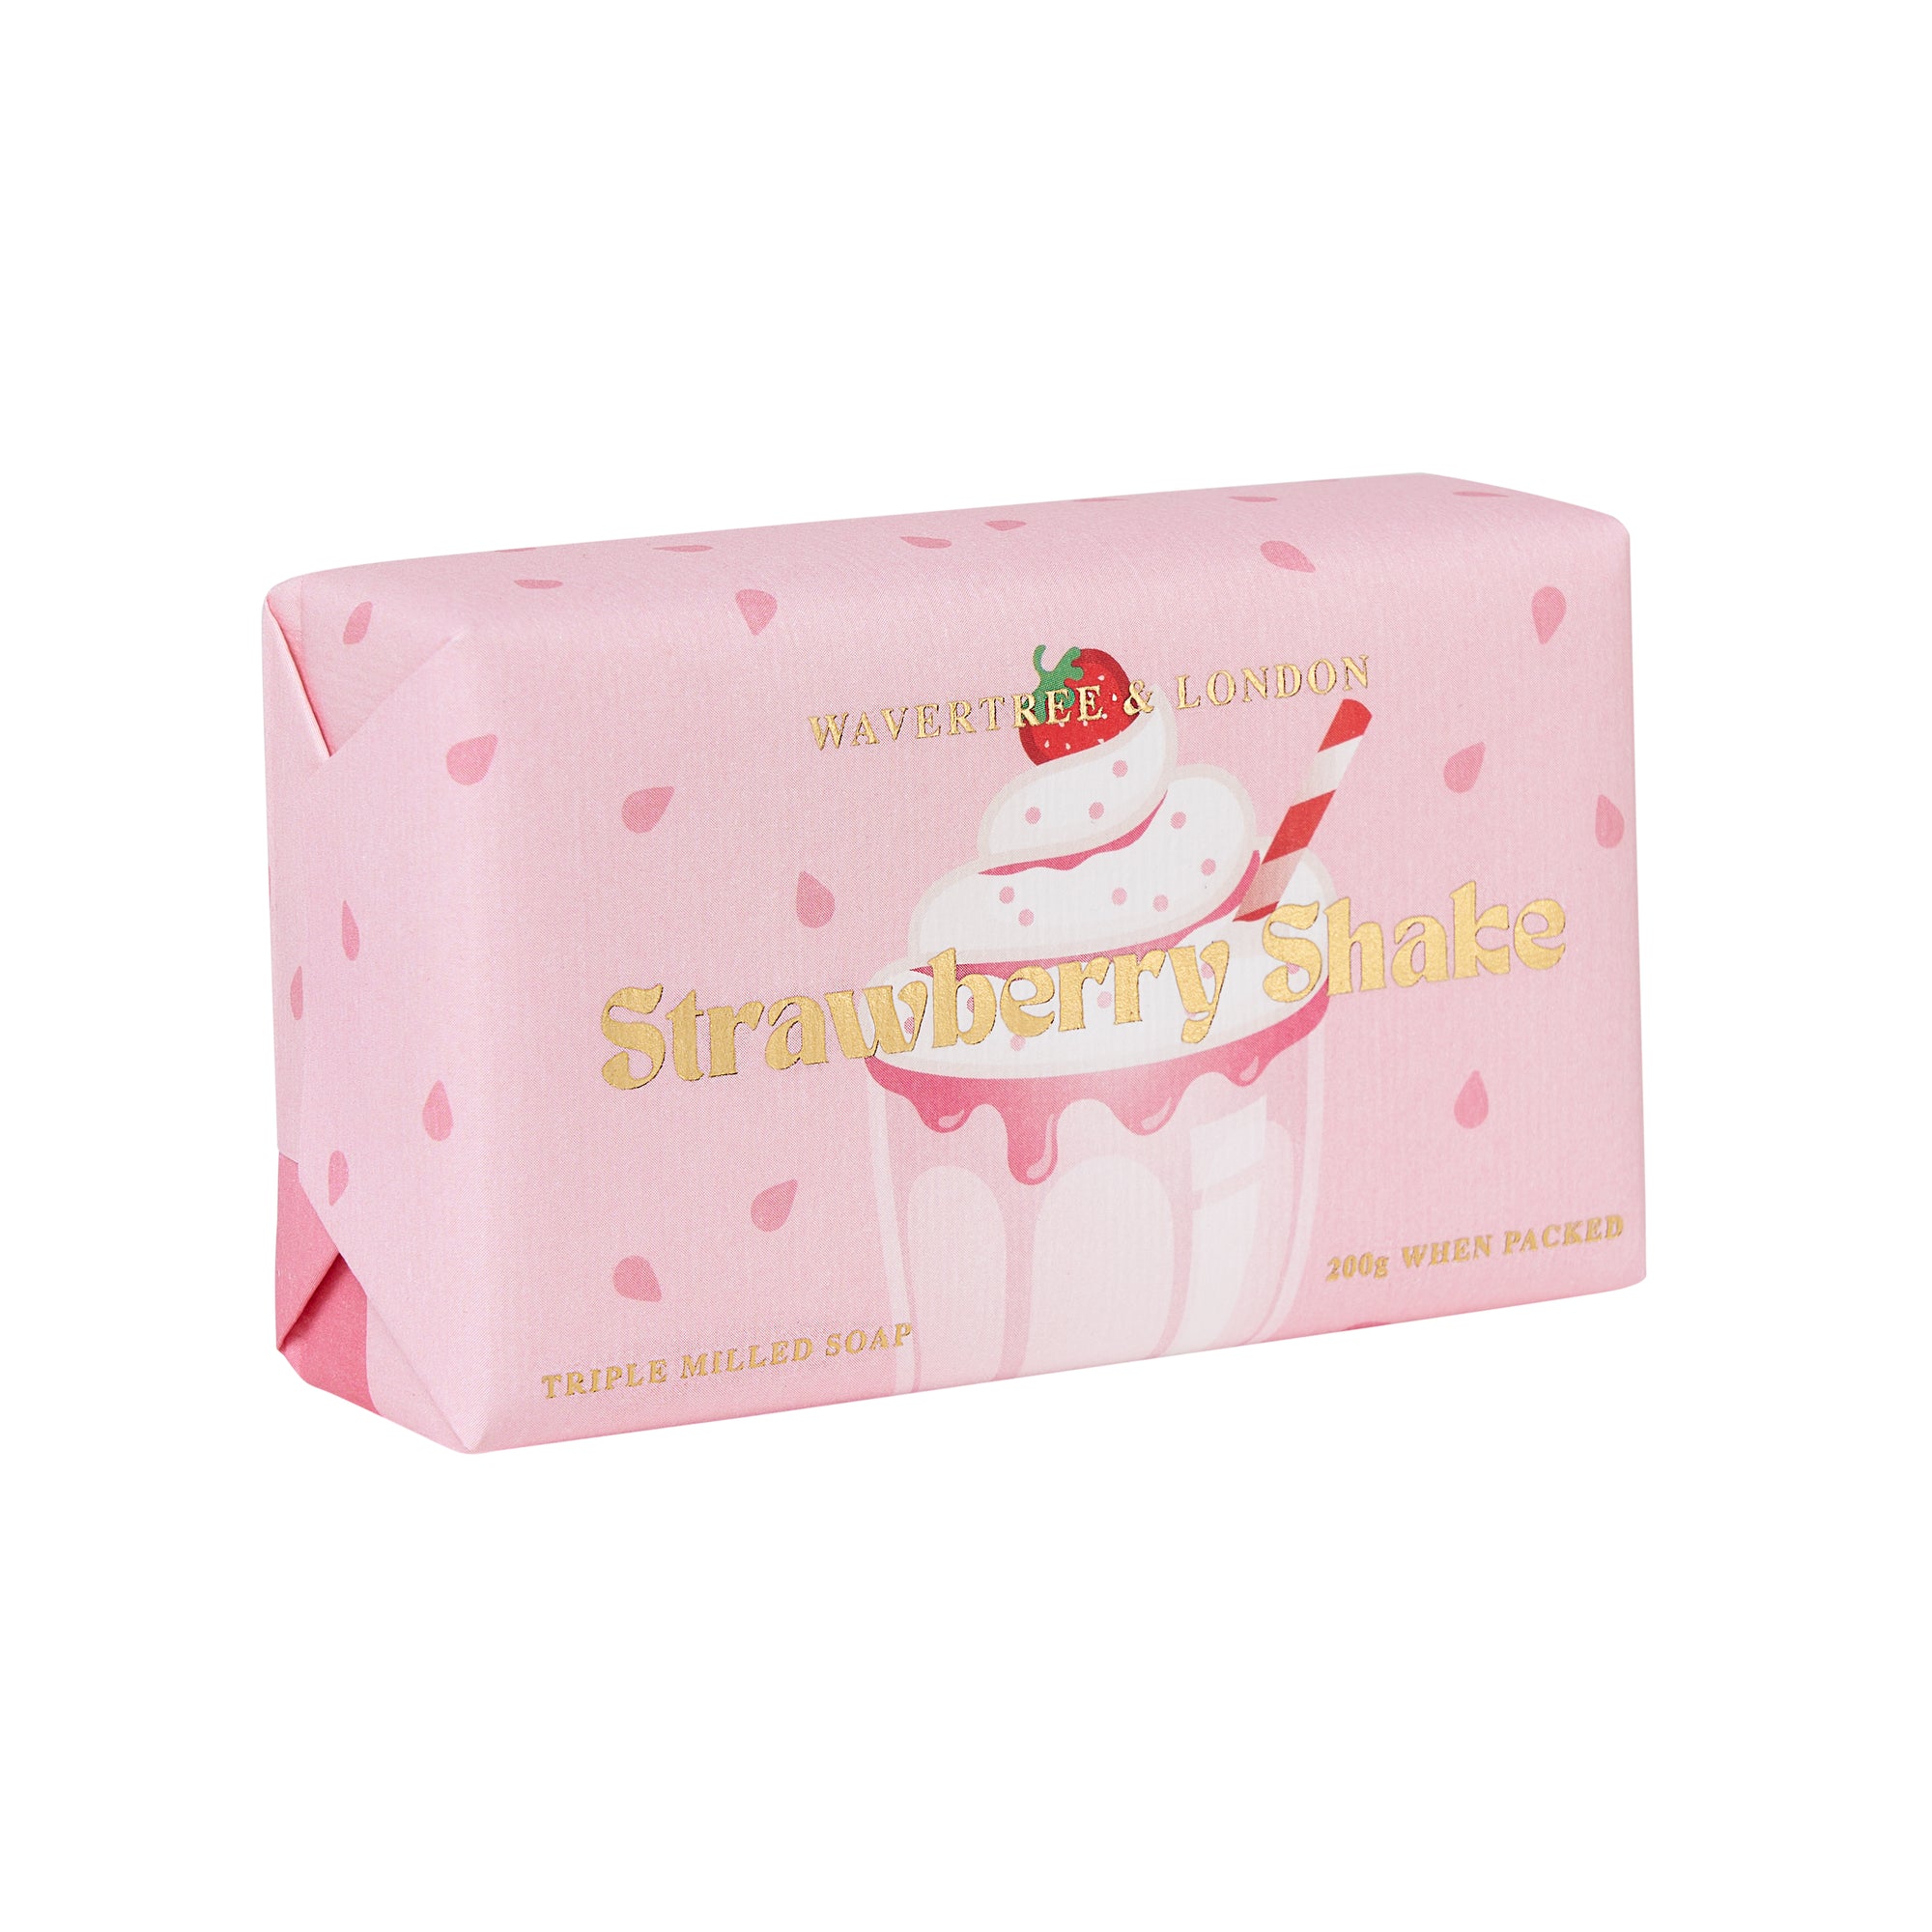 Strawberry Shake Soap Bar 200g